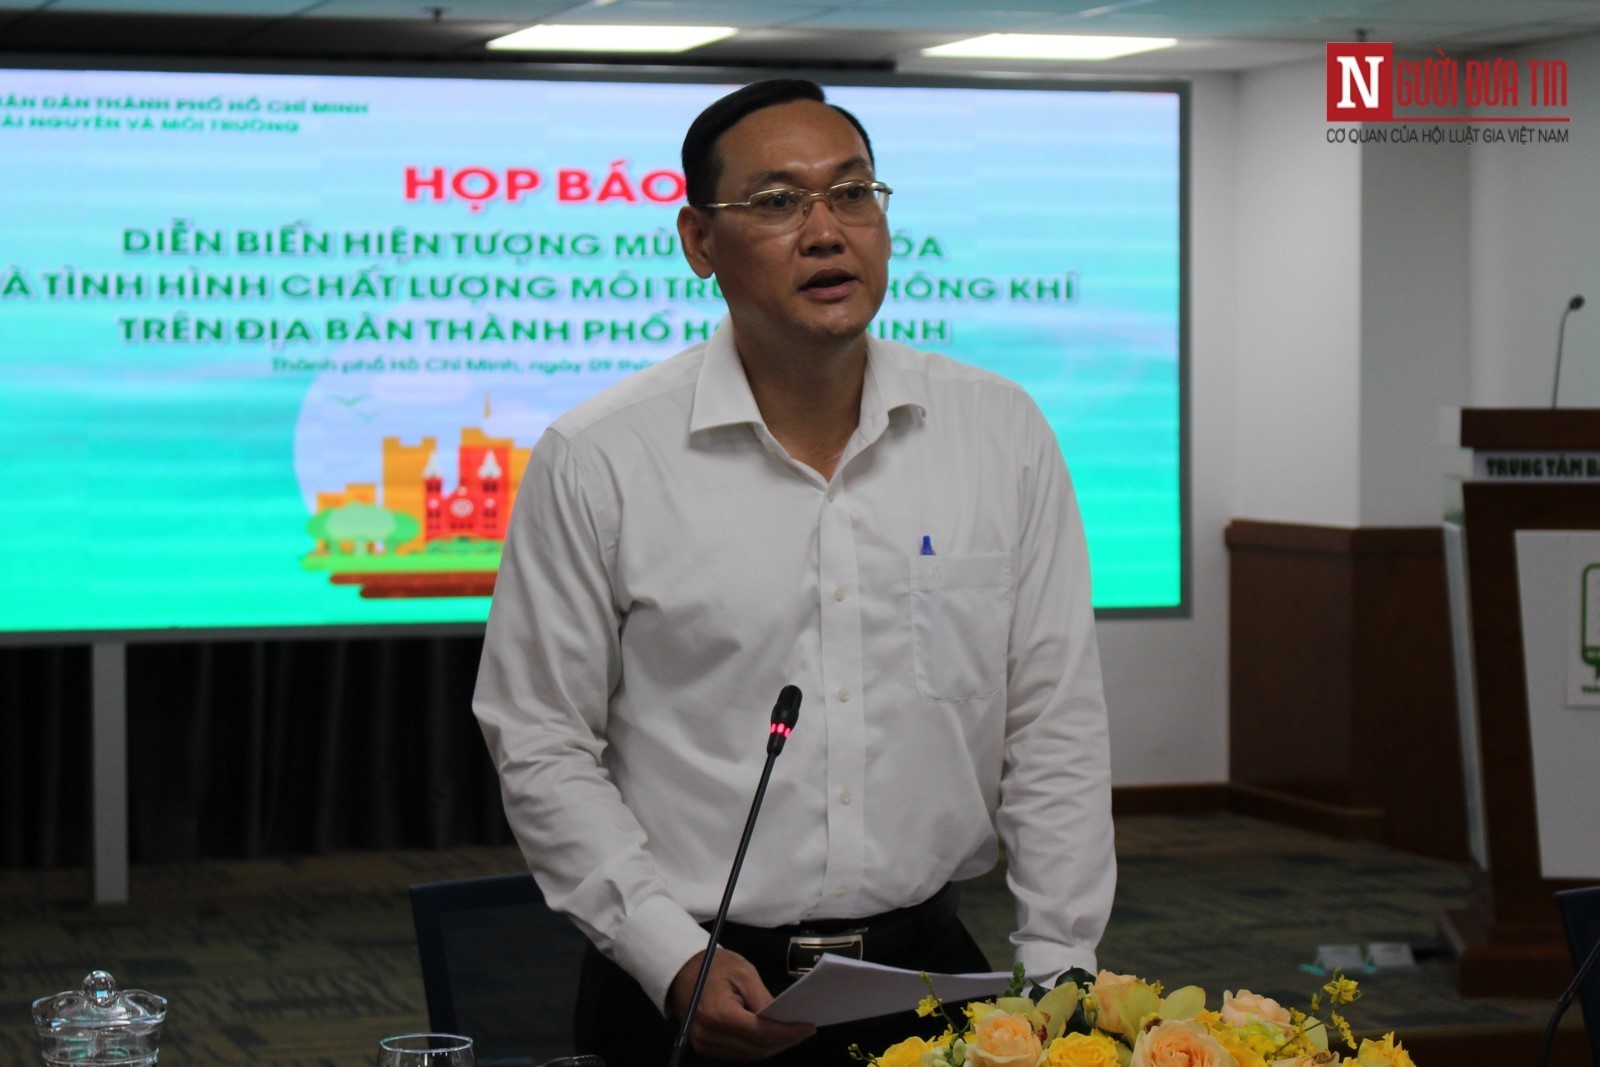 AirVisual pollution monitor app temporarily blocked in Vietnam